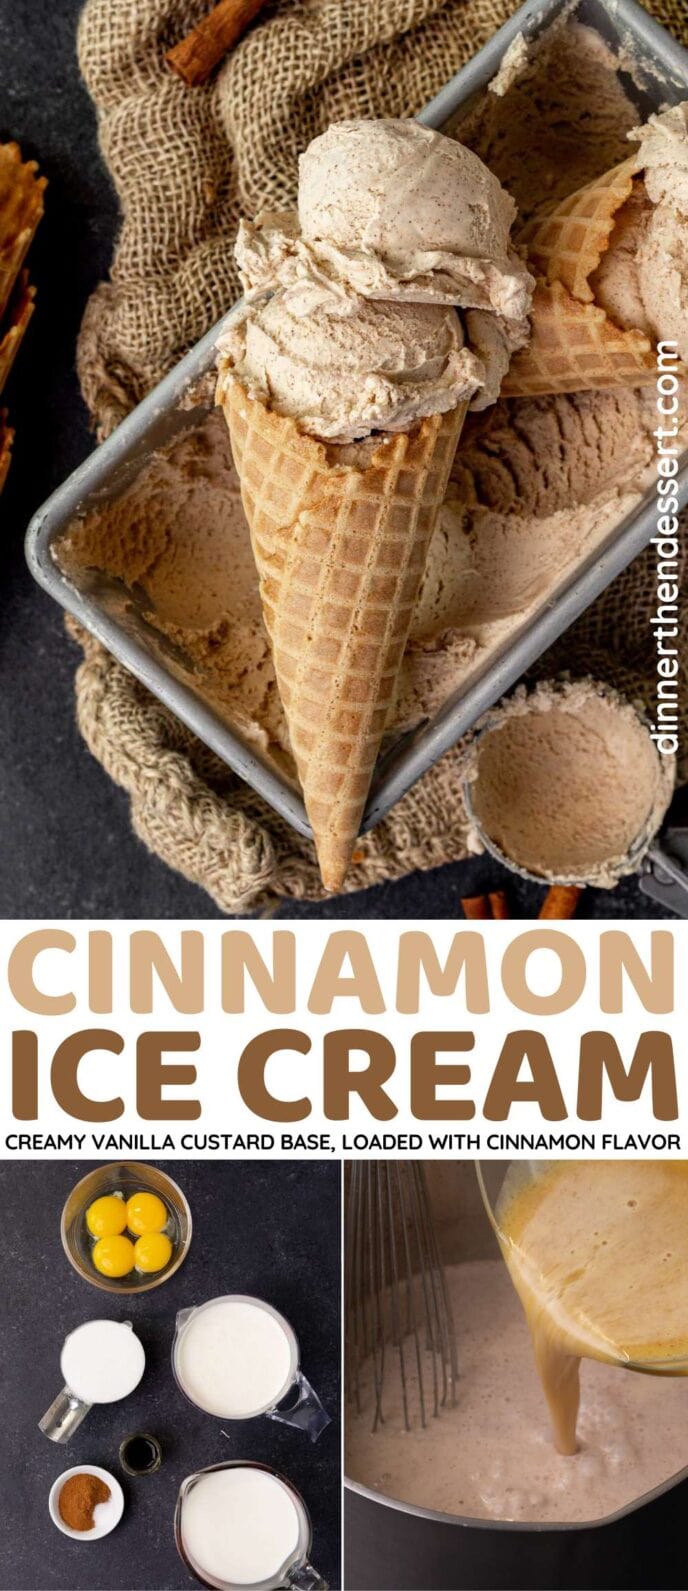 Cinnamon Ice Cream Collage